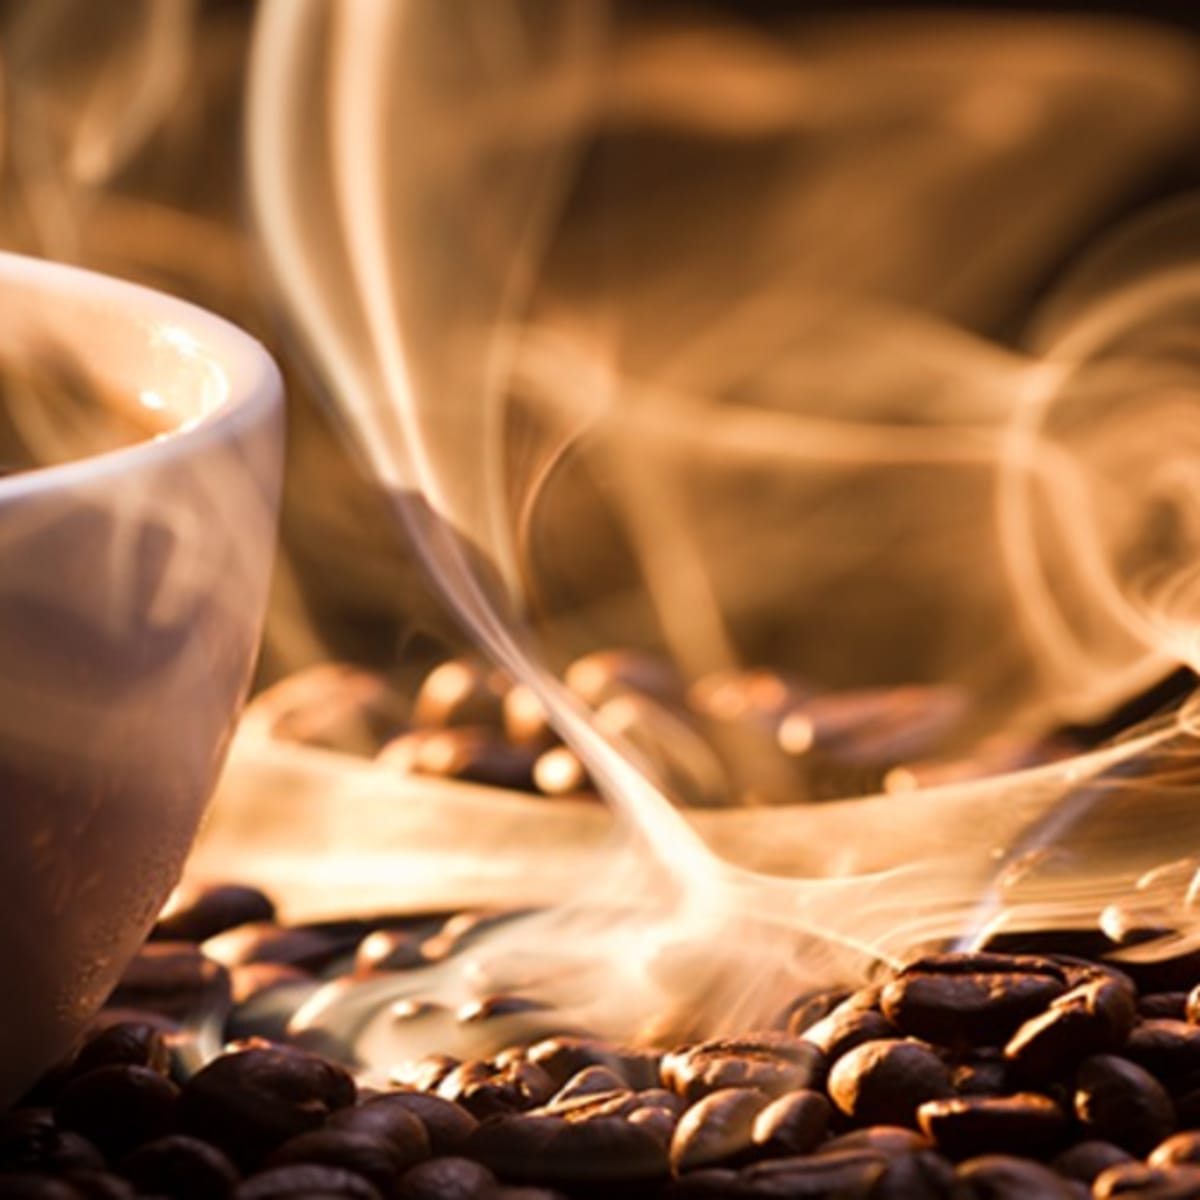 The Wirsh Best-Selling Coffee Grinder is Under $20 on